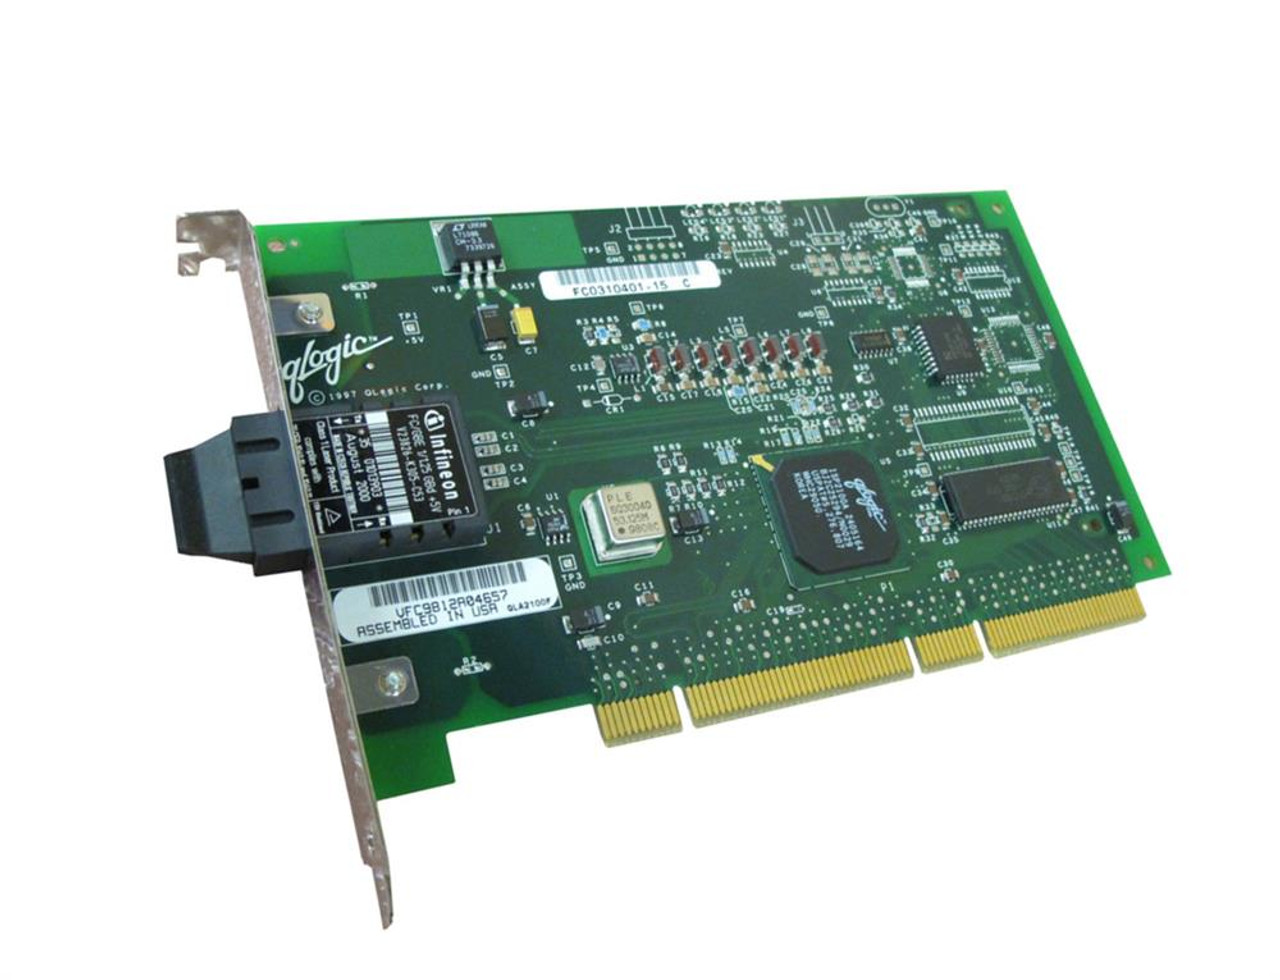 FC0310401-15 C Qlogic Single Loop PCI Fc-al Host Adapter FC0310401-15